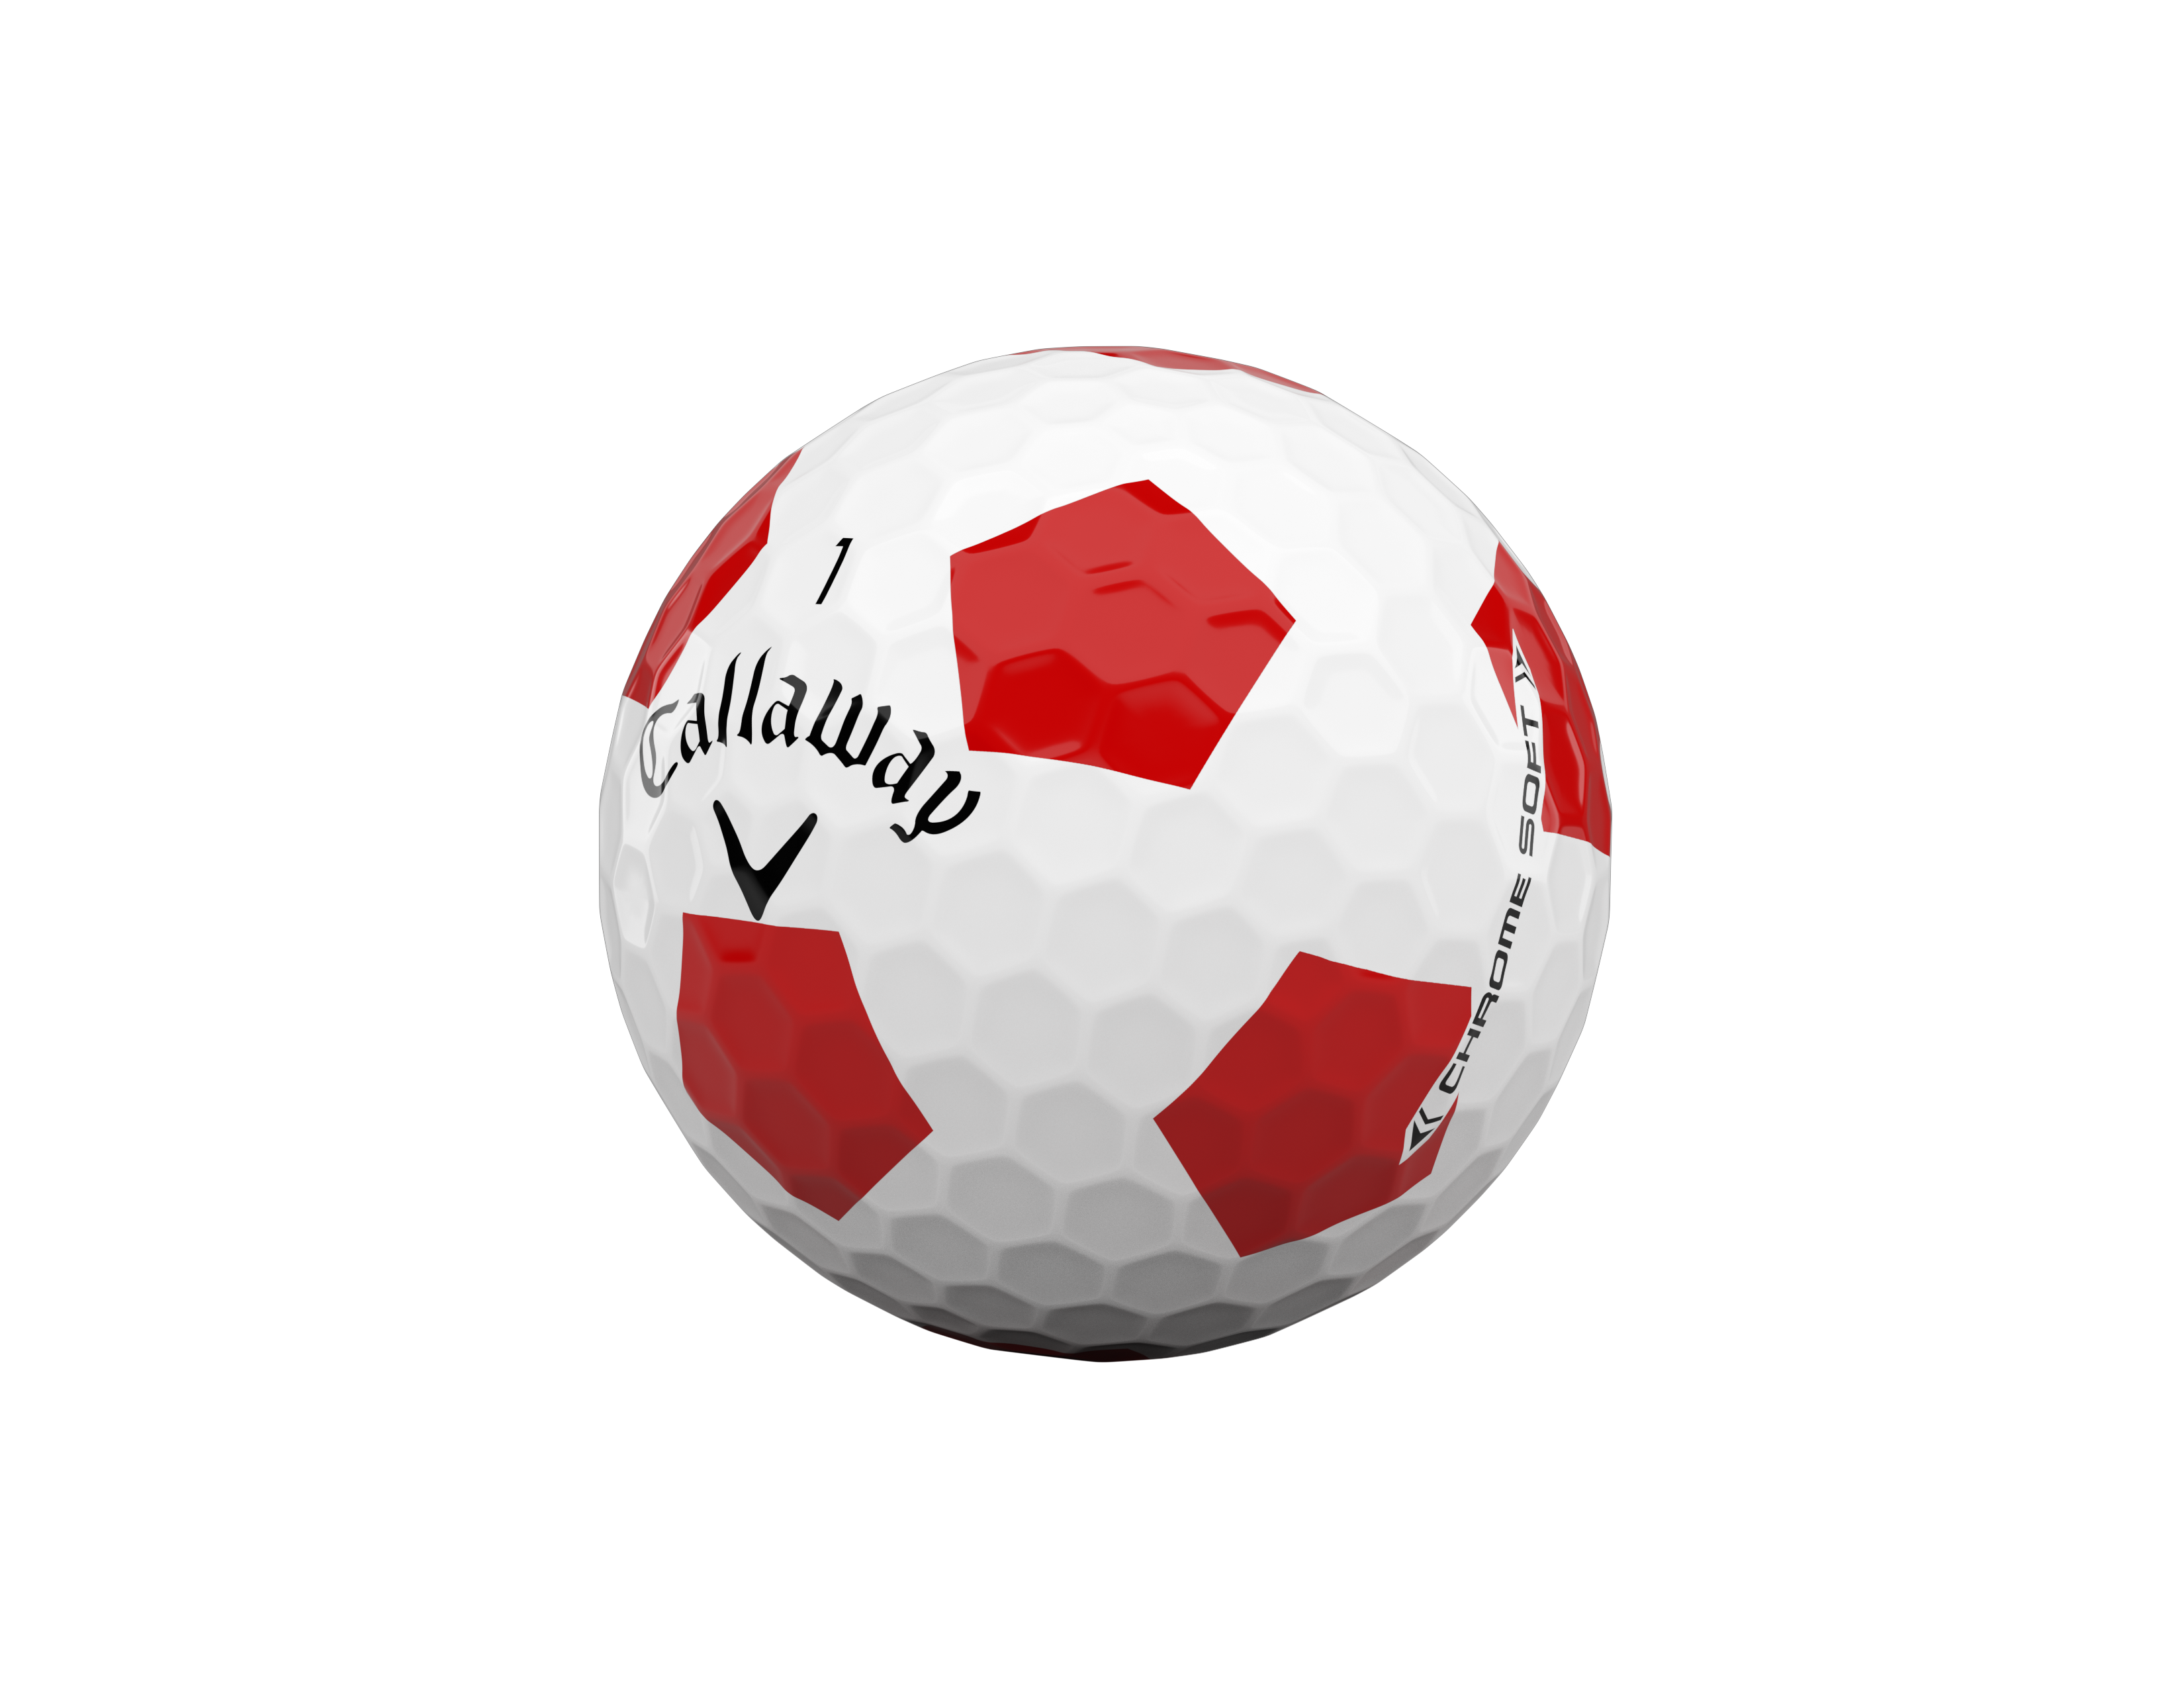 Callaway Golf Introduces Next Generation of Chrome Soft & Chrome Soft X ...